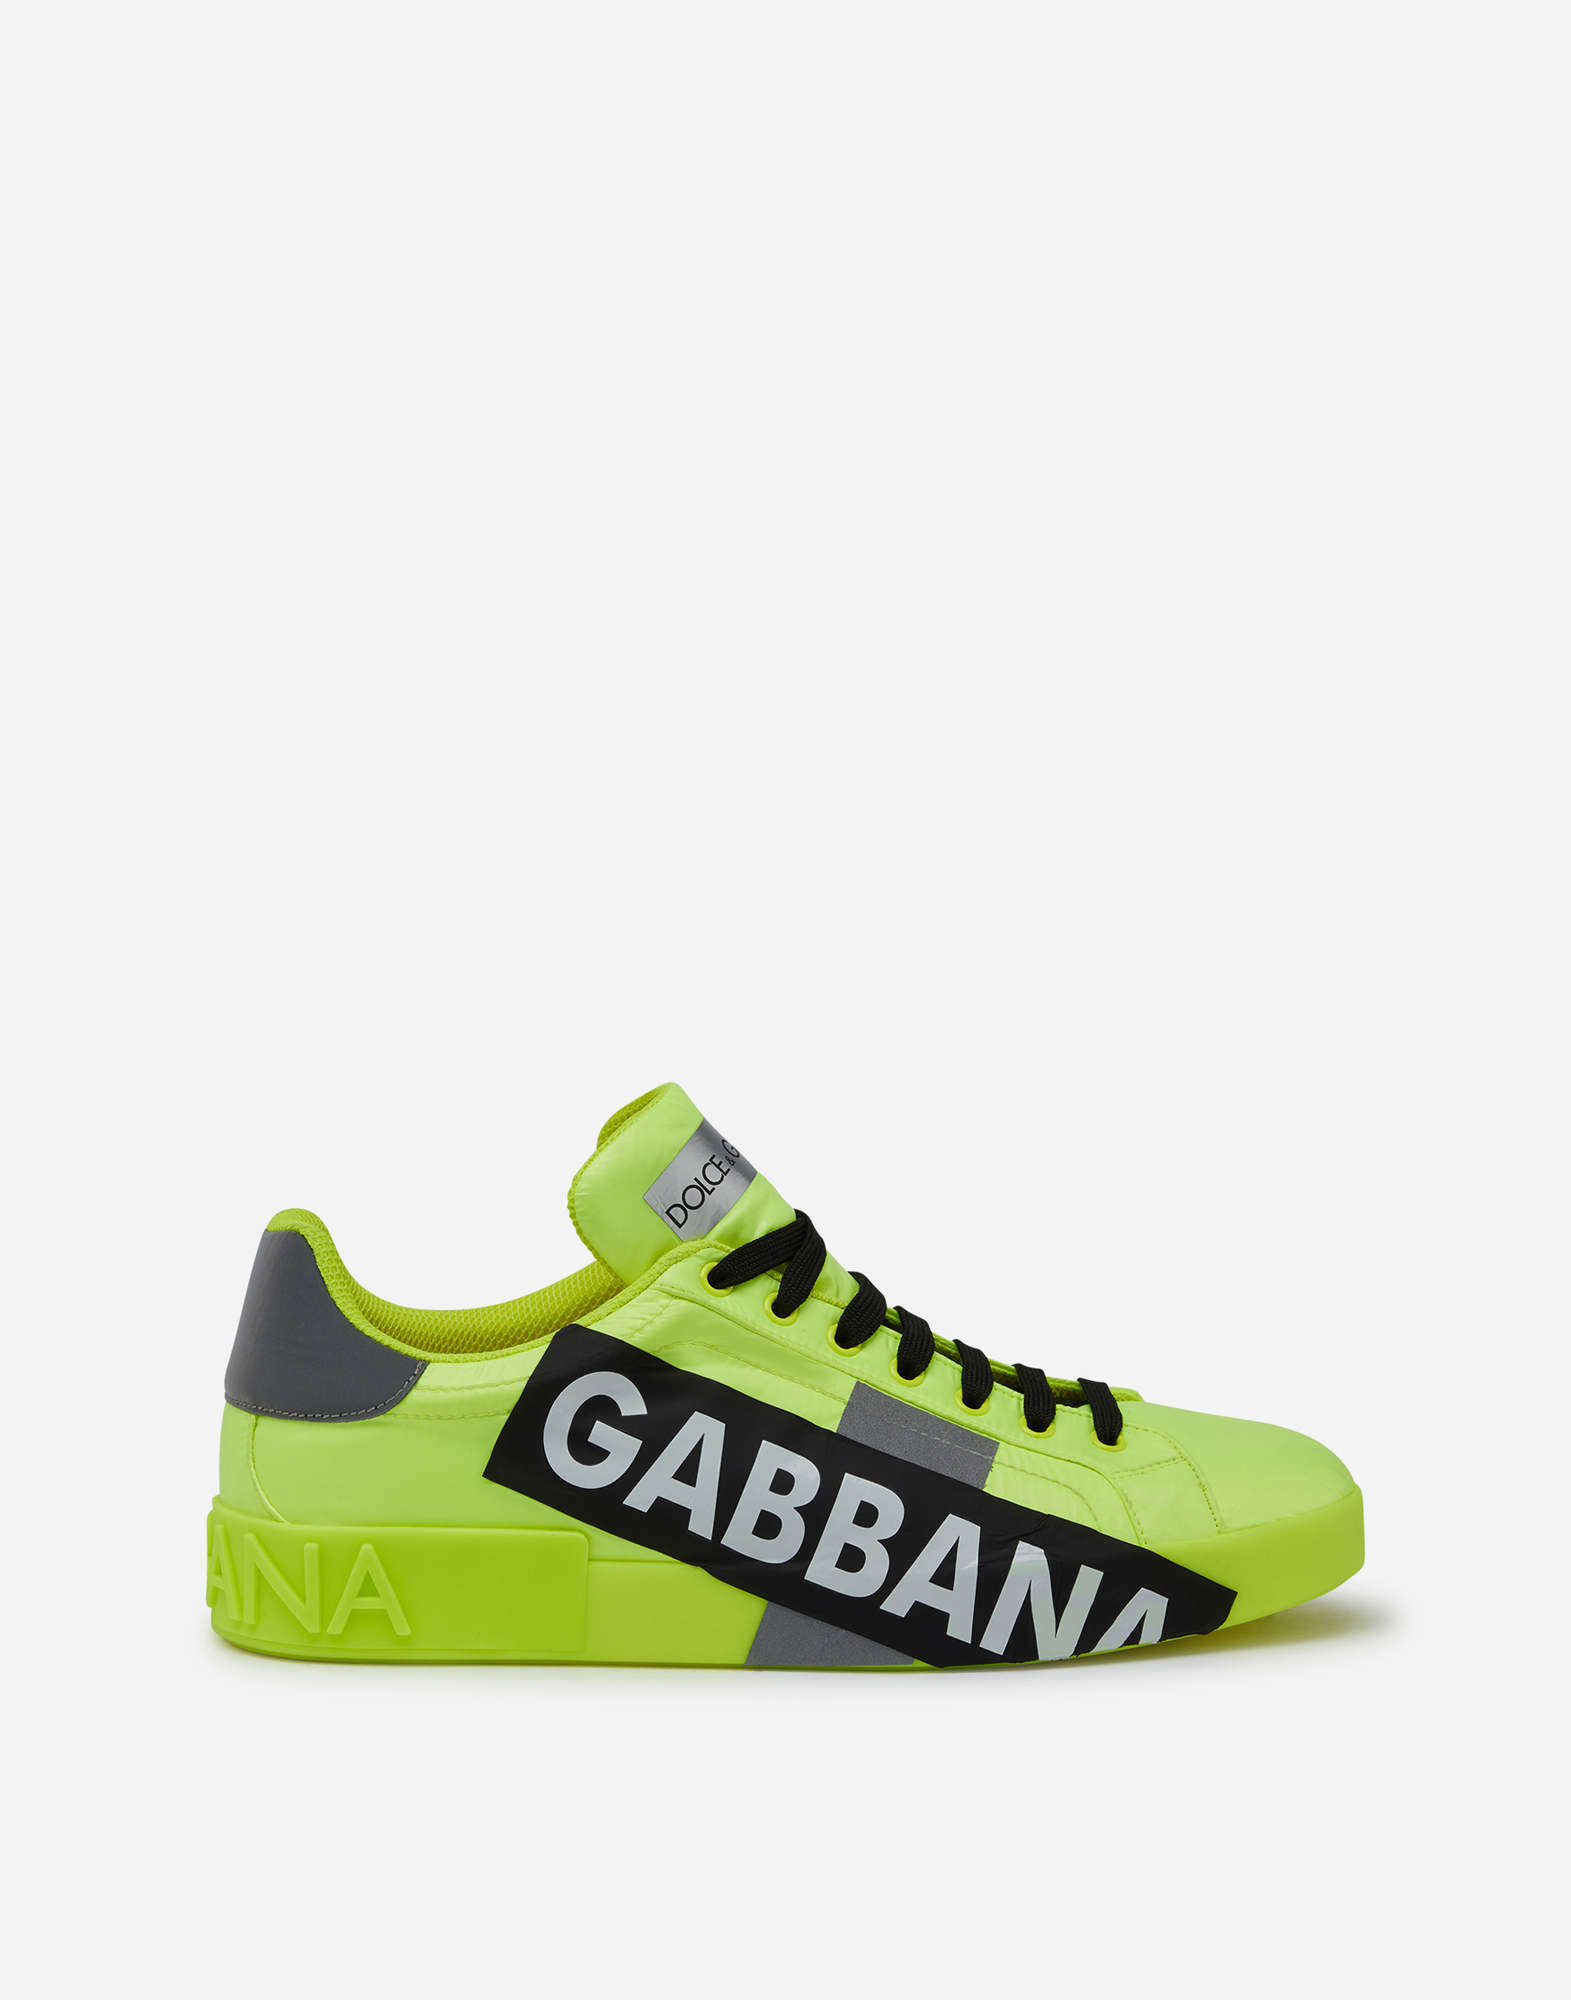 dolce gabbana sneakers yellow